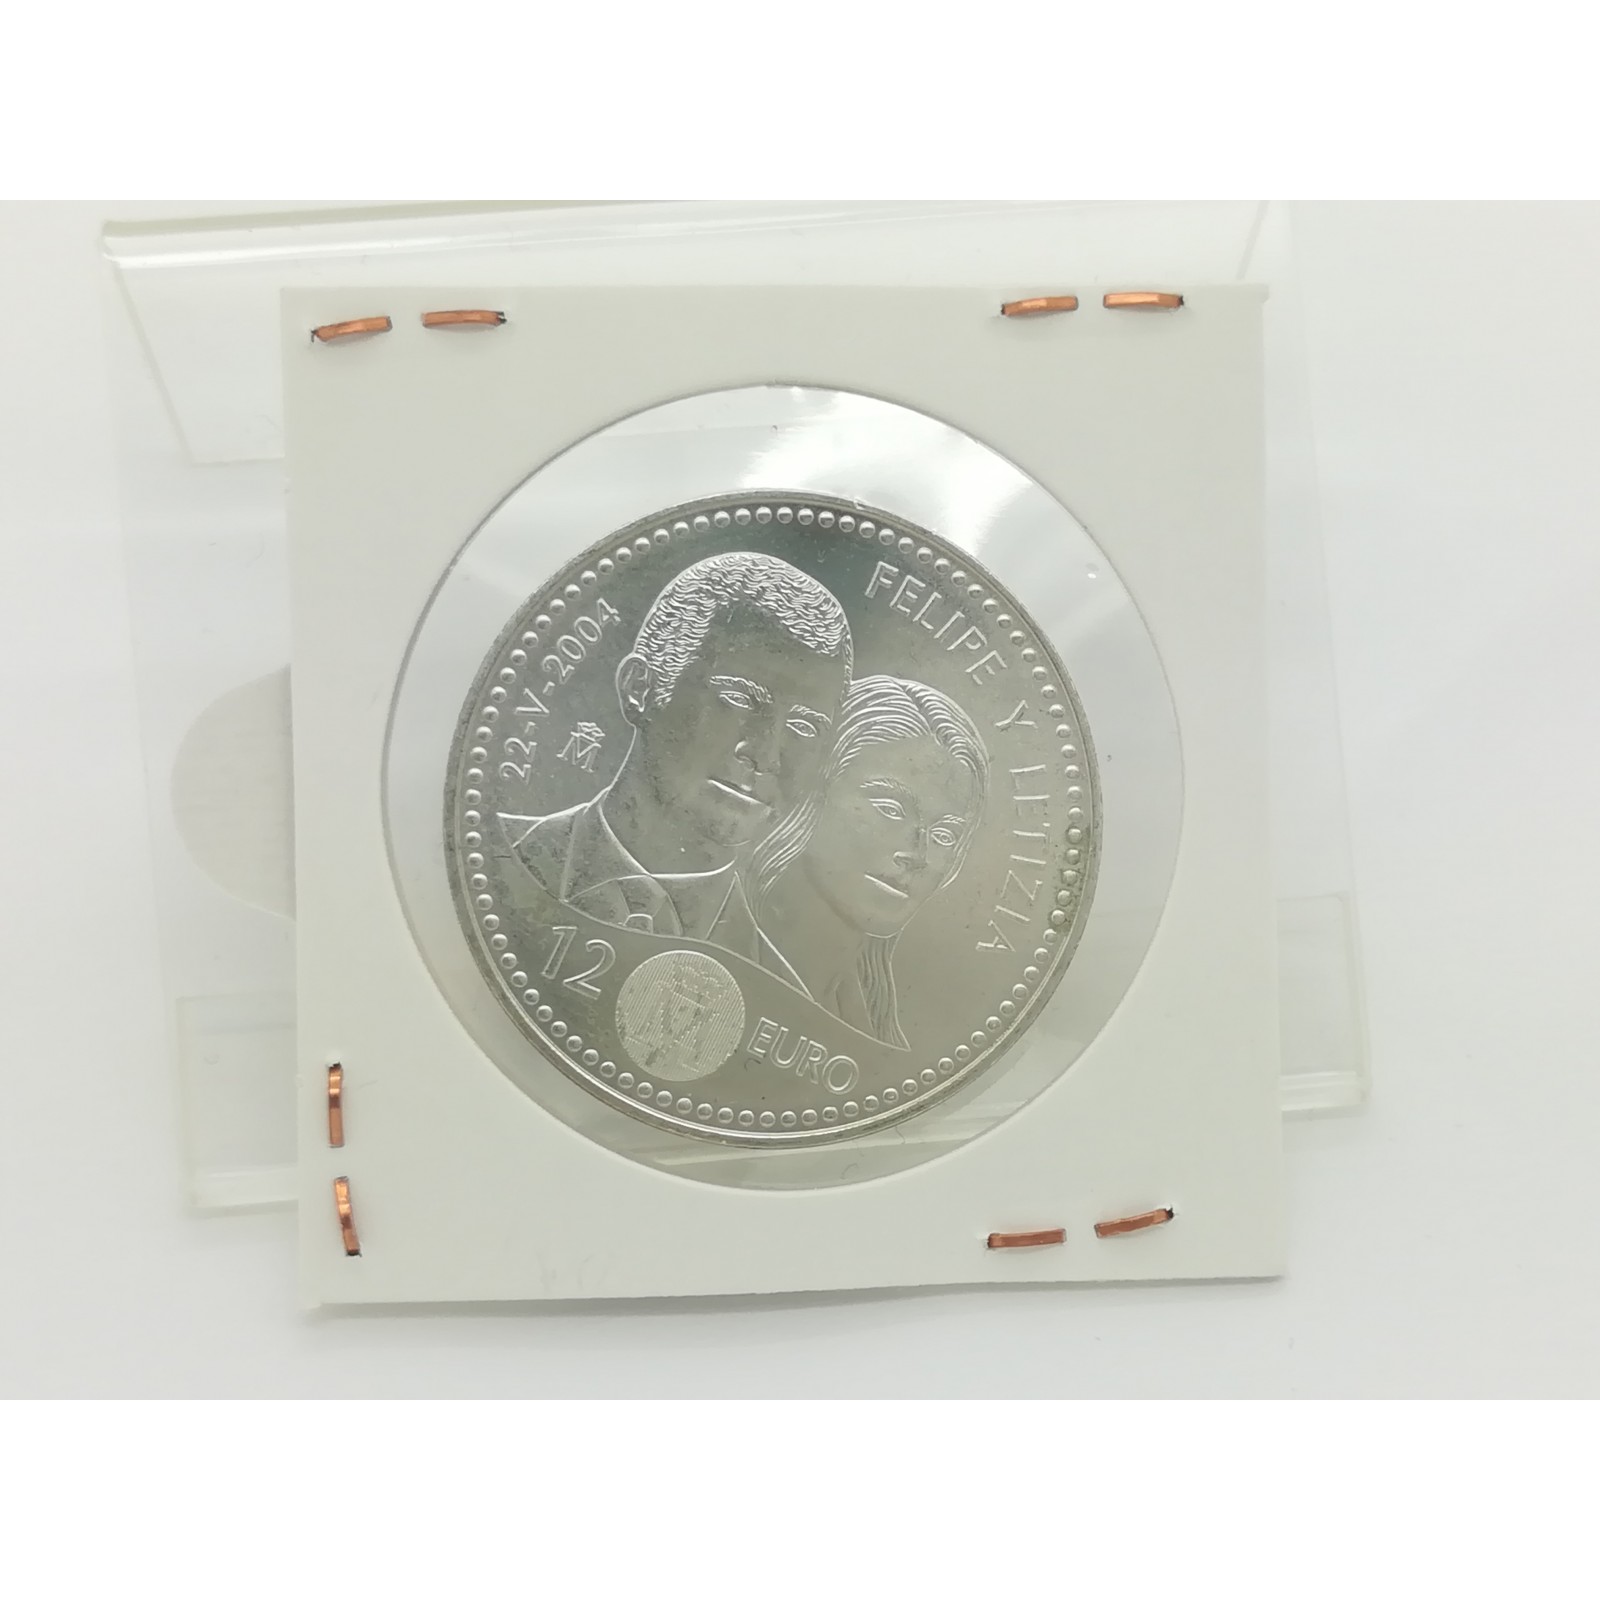 Pasado Milagroso Exención Moneda Plata de 12 Euros 2004 22-V-2004 Felipe y Letizia de segunda mano